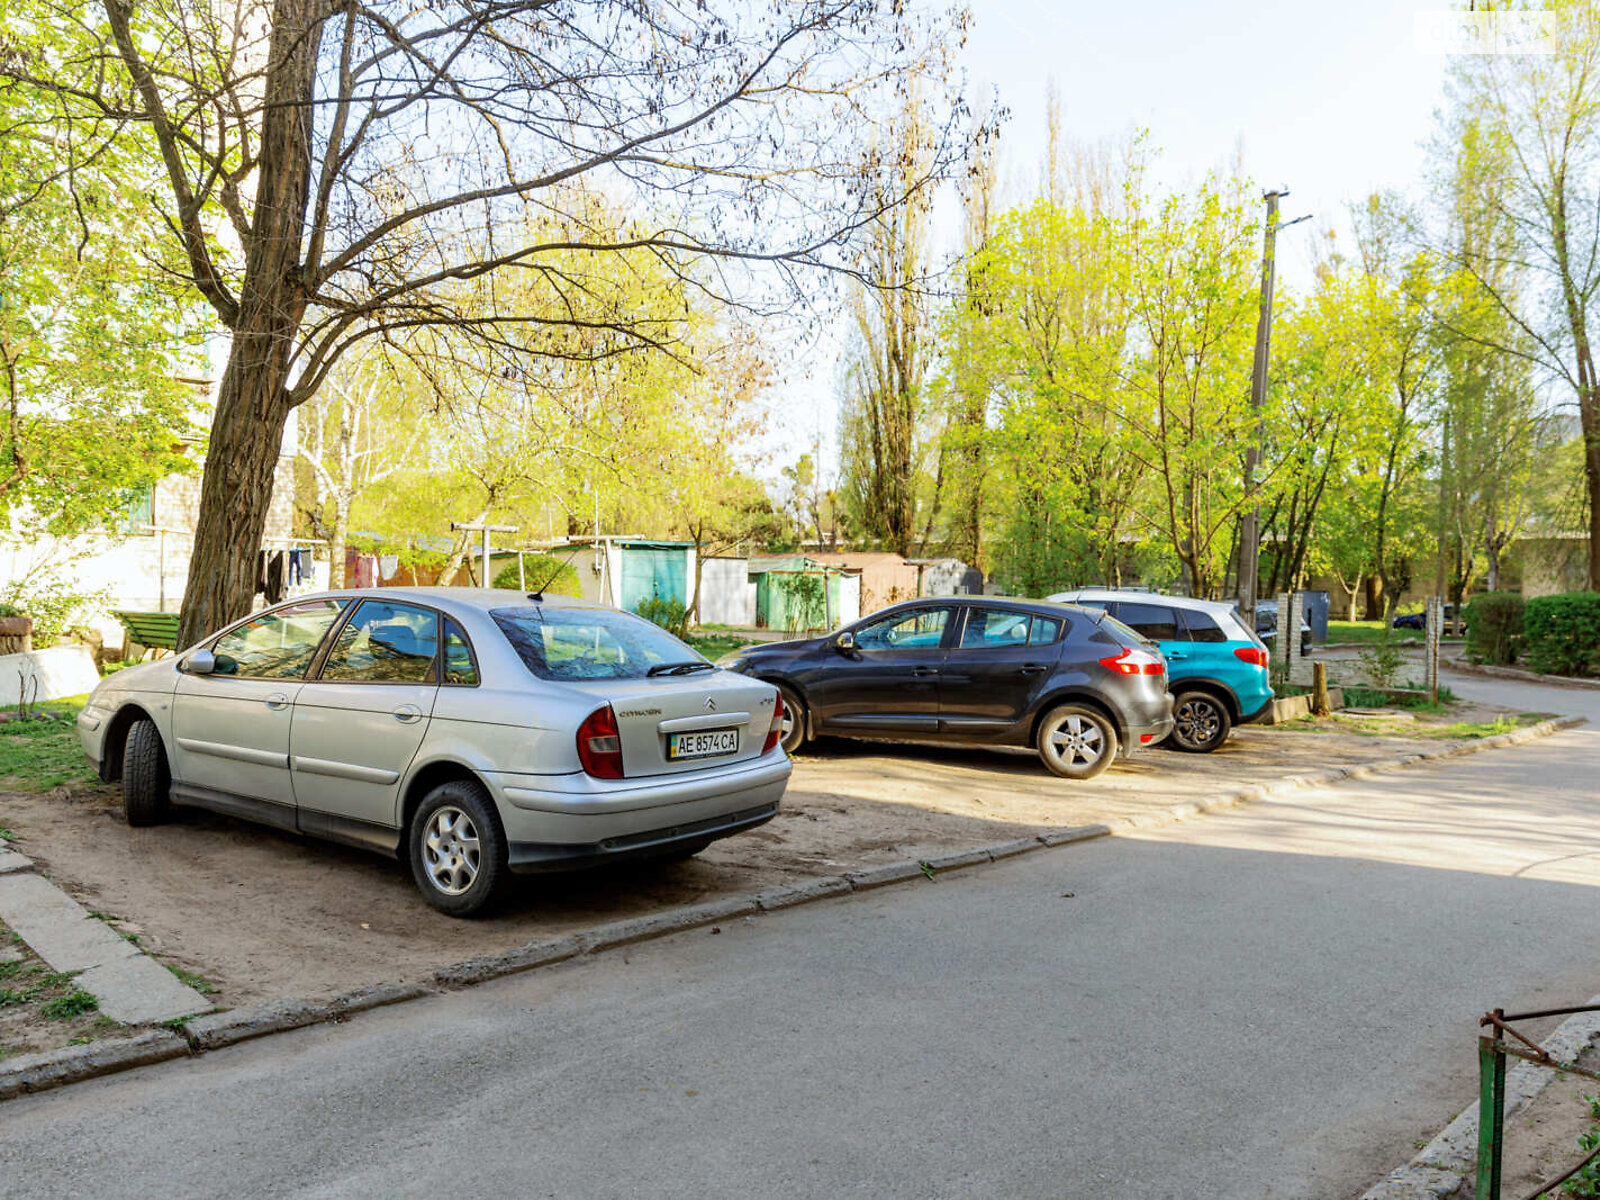 Продажа трехкомнатной квартиры в Новомосковске, на ул. Сучкова, фото 1